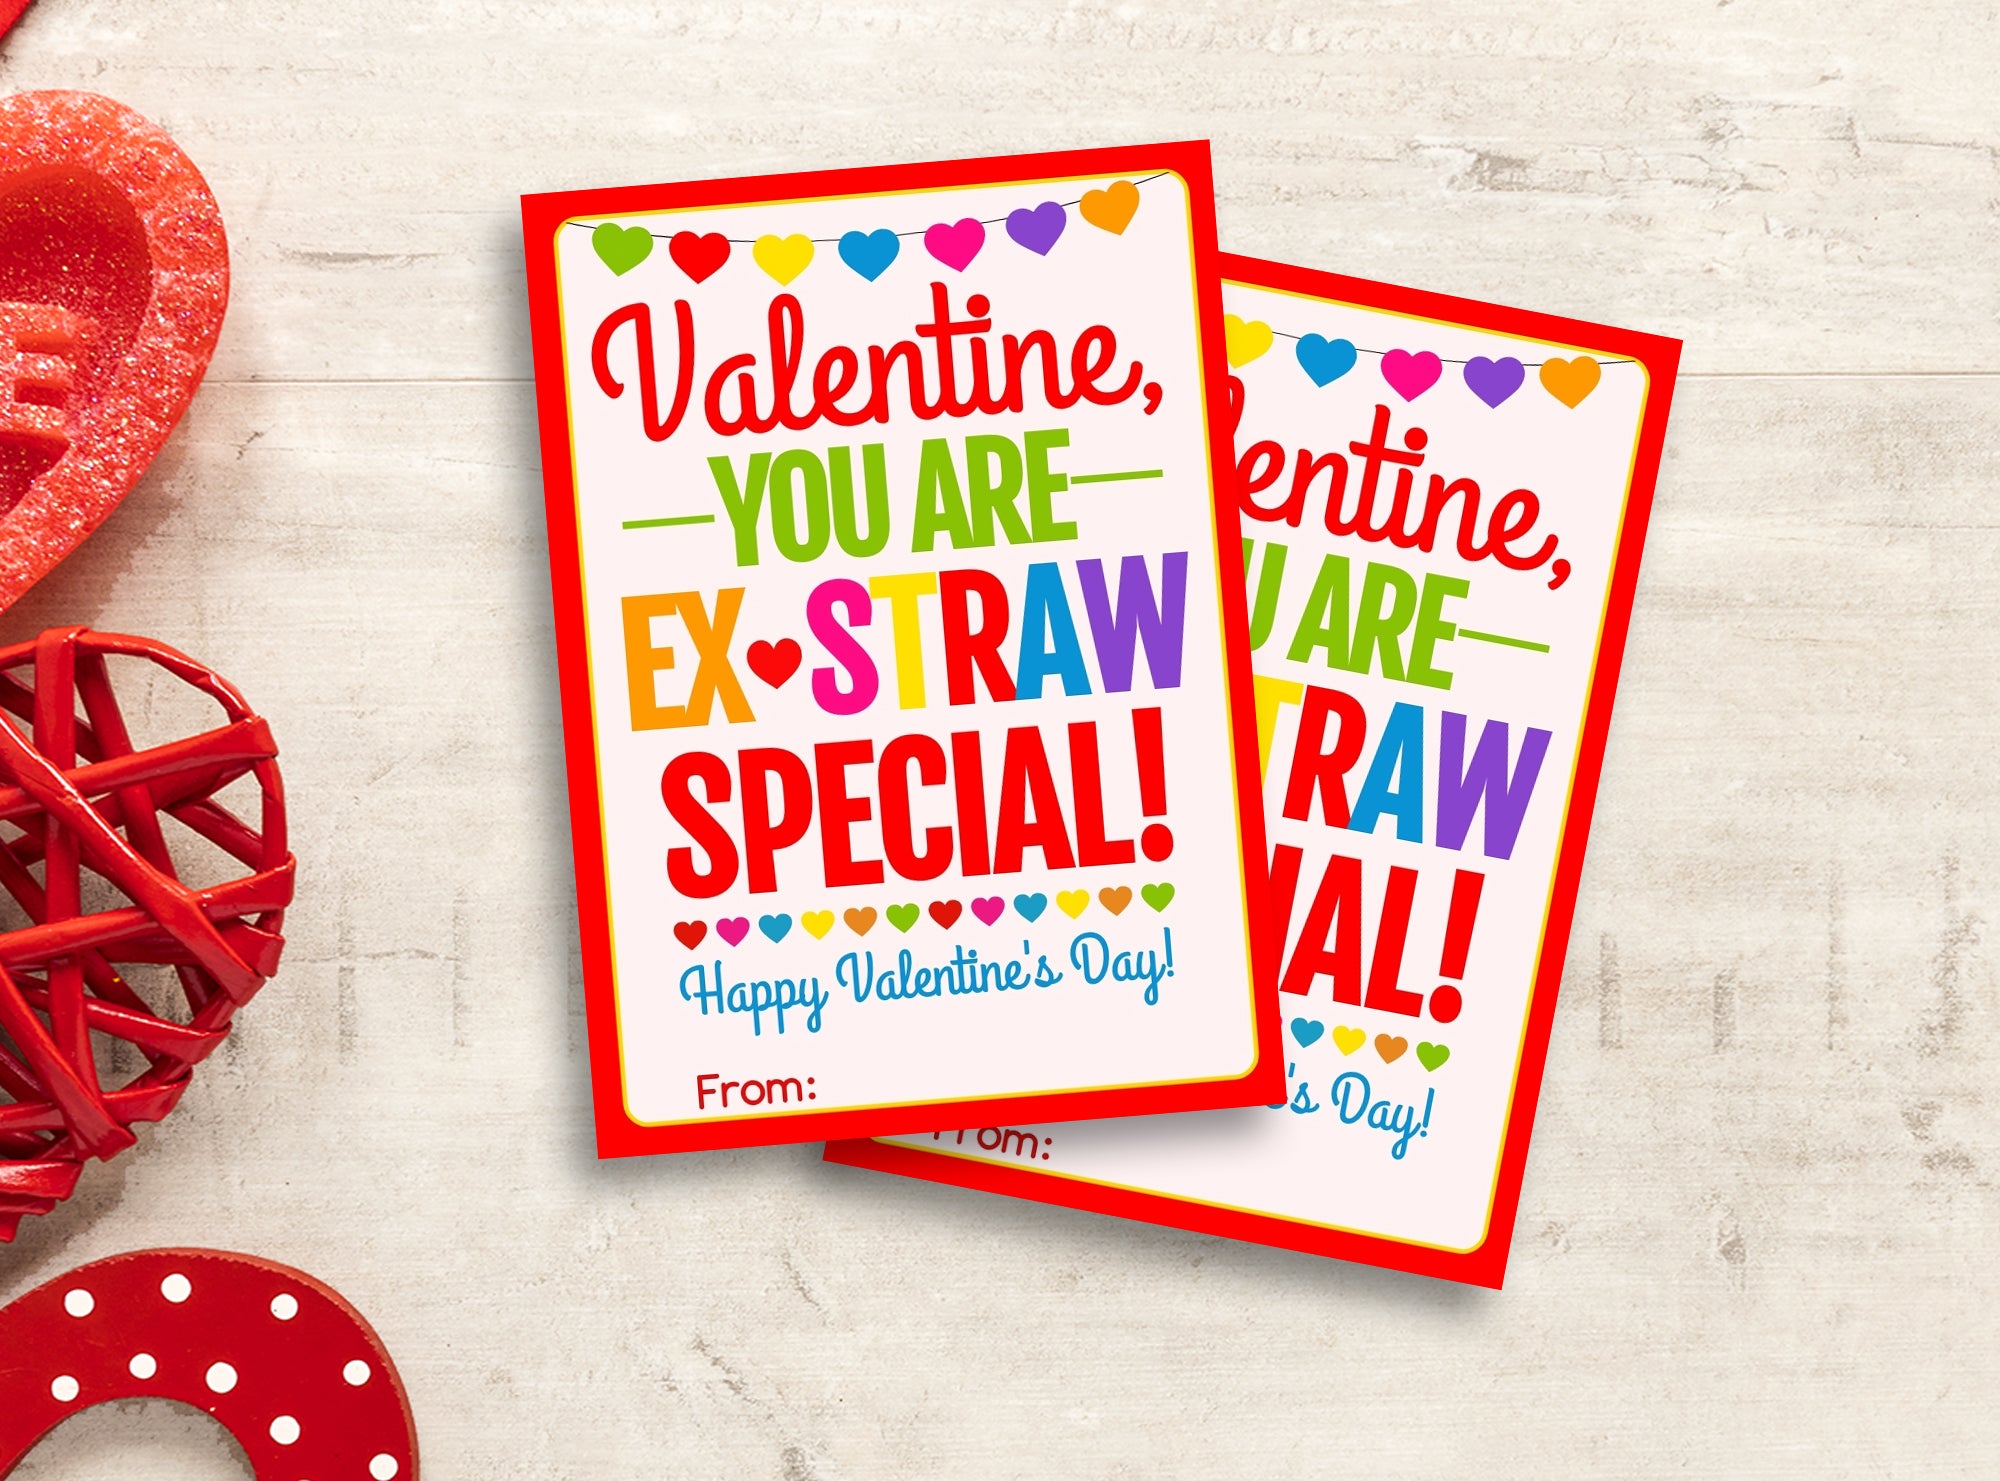 ex-straw-special-valentine-card-girly-silly-crazy-straw-gift-tags-sc